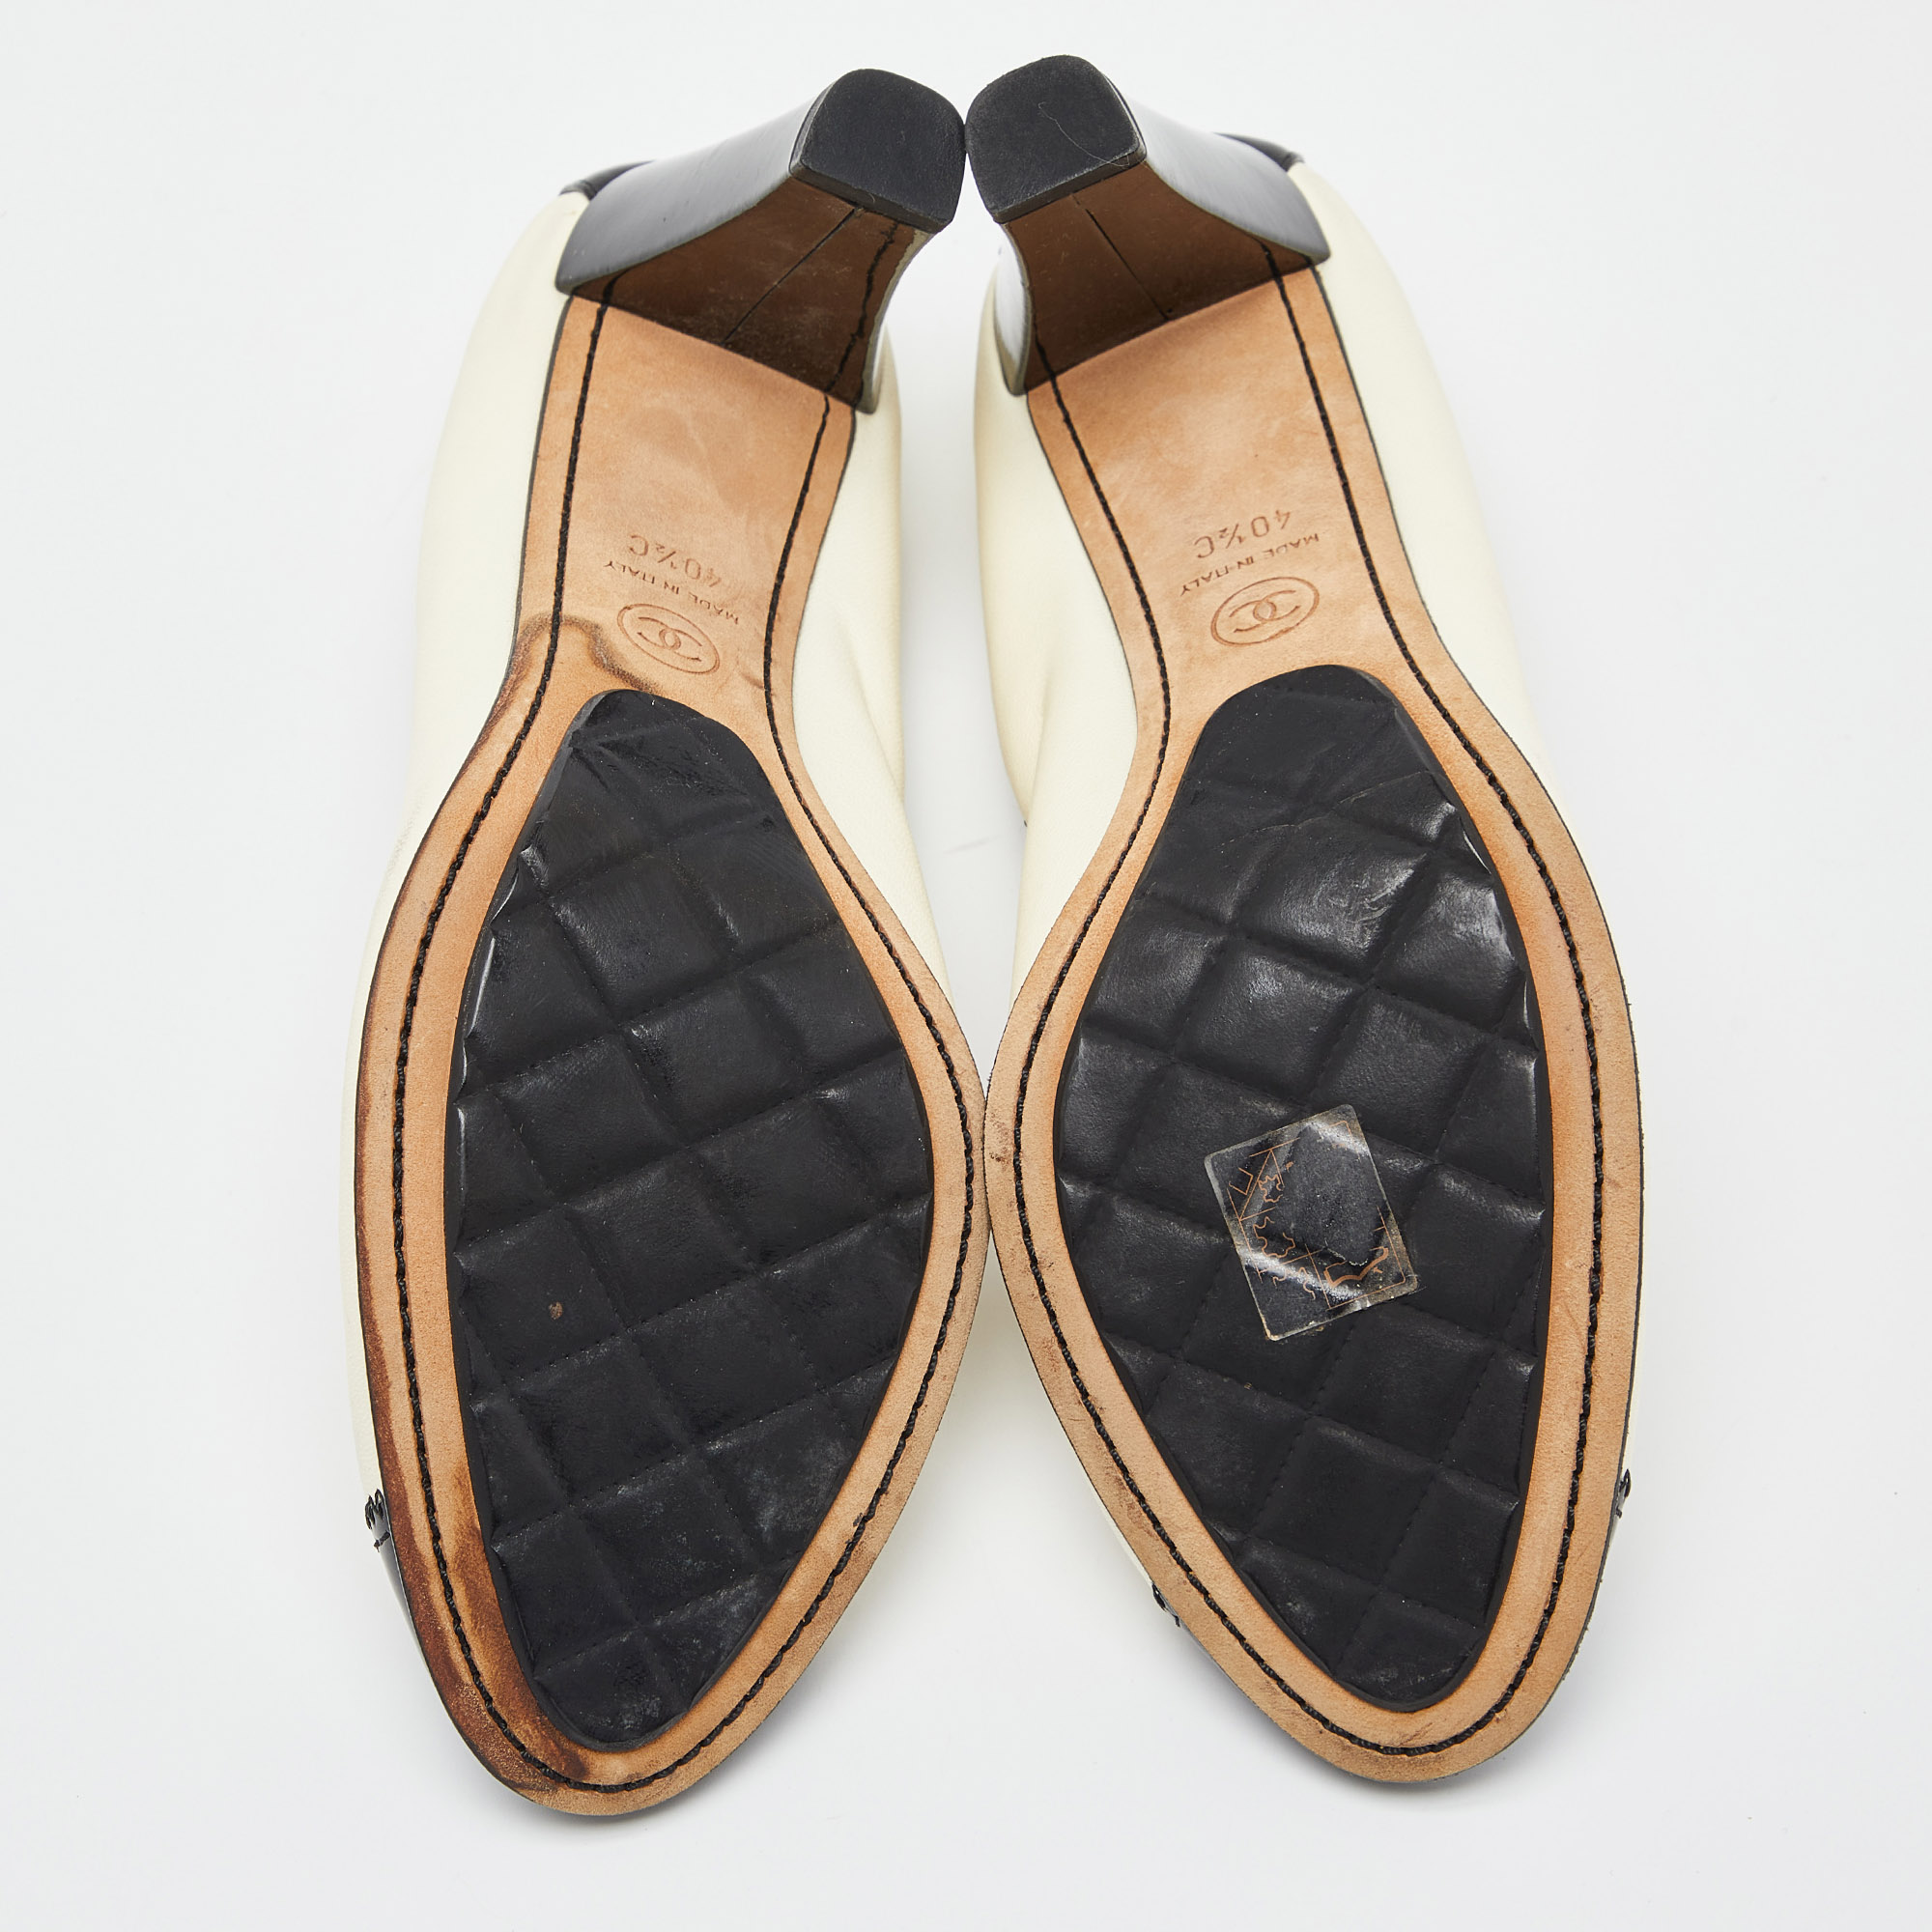 Chanel Beige/Black Leather And Patent CC Cap Toe Scrunch Block Heel Pumps Size 40.5